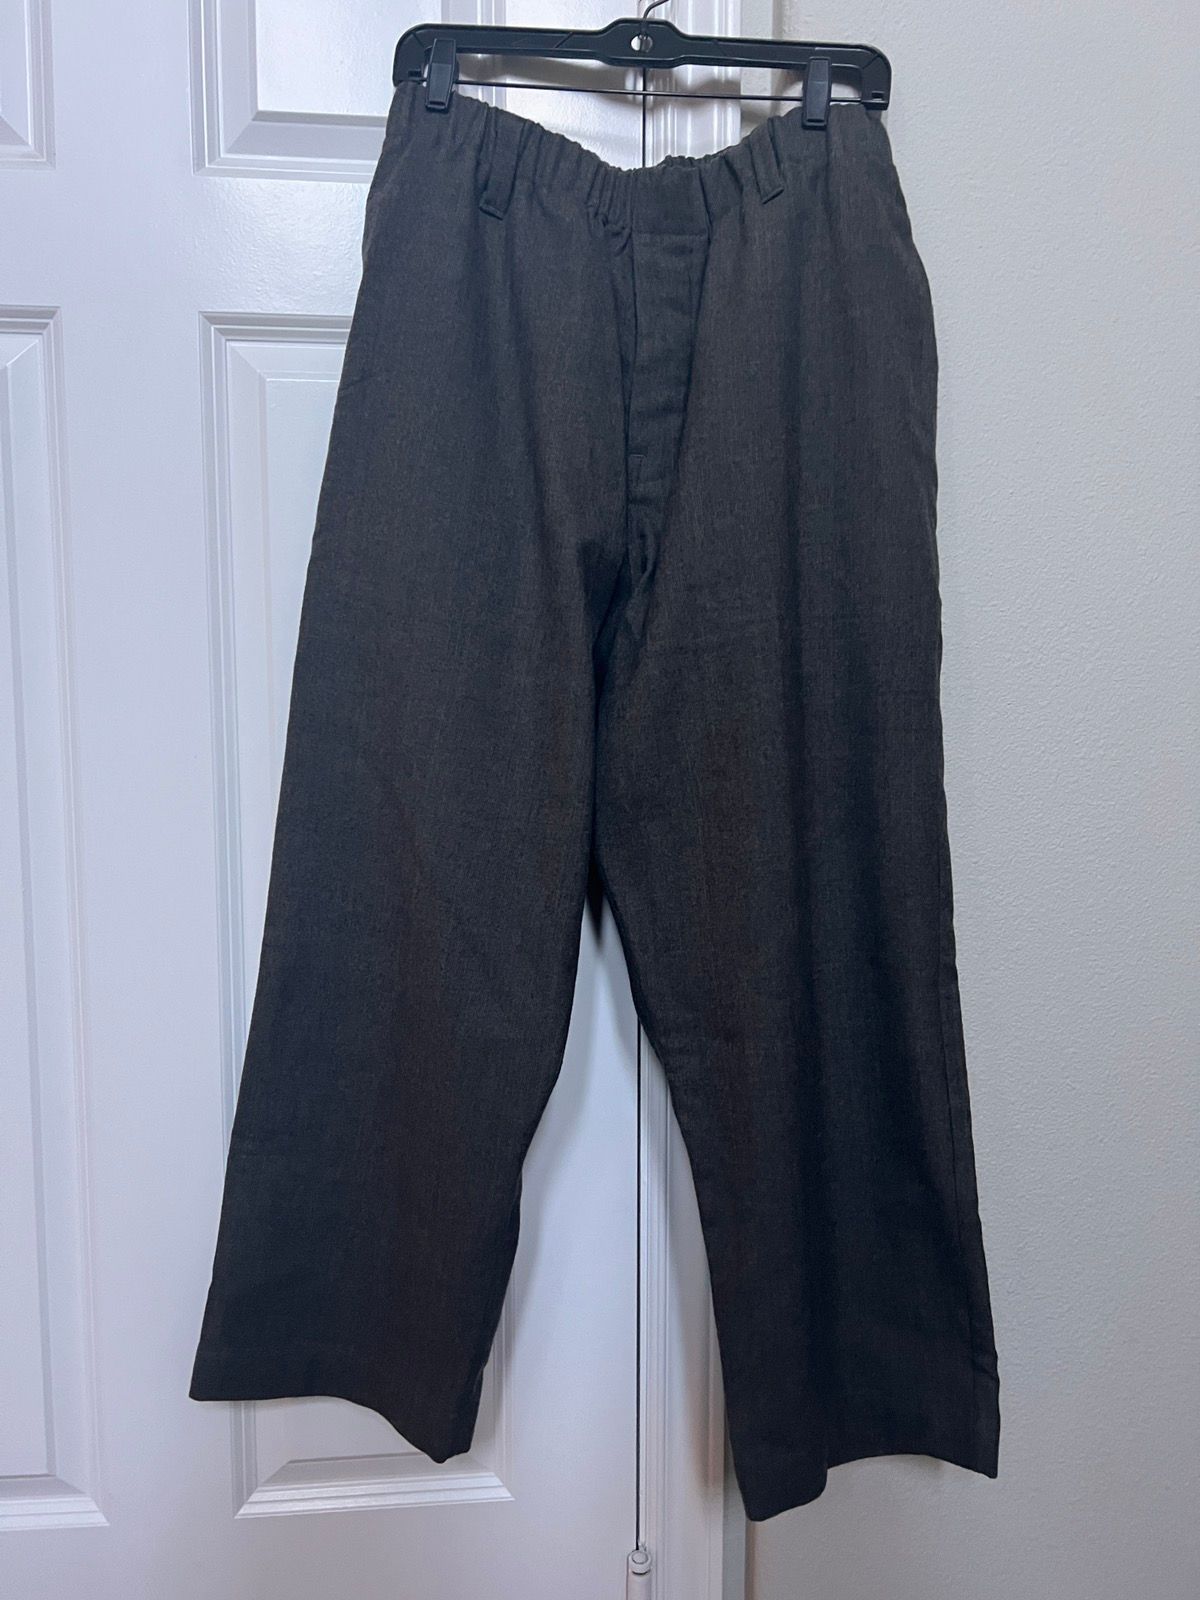 Evan Kinori Glencheck wool elastic pants size L | Grailed